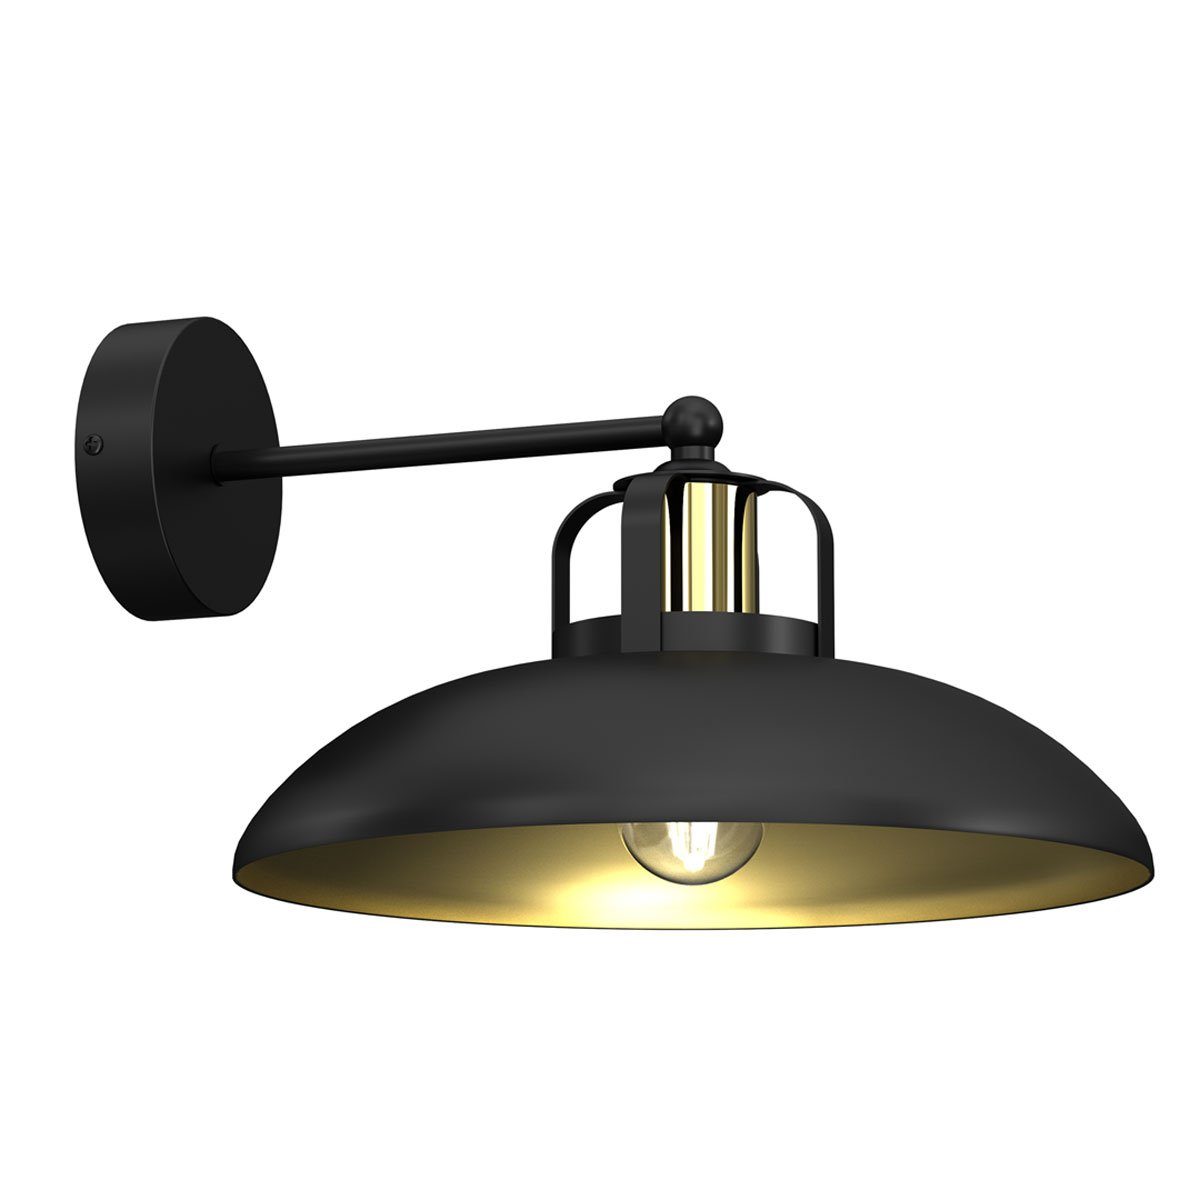 Kiom Wandleuchte Wandlampe Visalia W schwarz / gold E27 Metall 34 cm, für wechselbare Leuchtmittel, Leuchtmittel nicht inklusive, Leuchtmittel abhängig